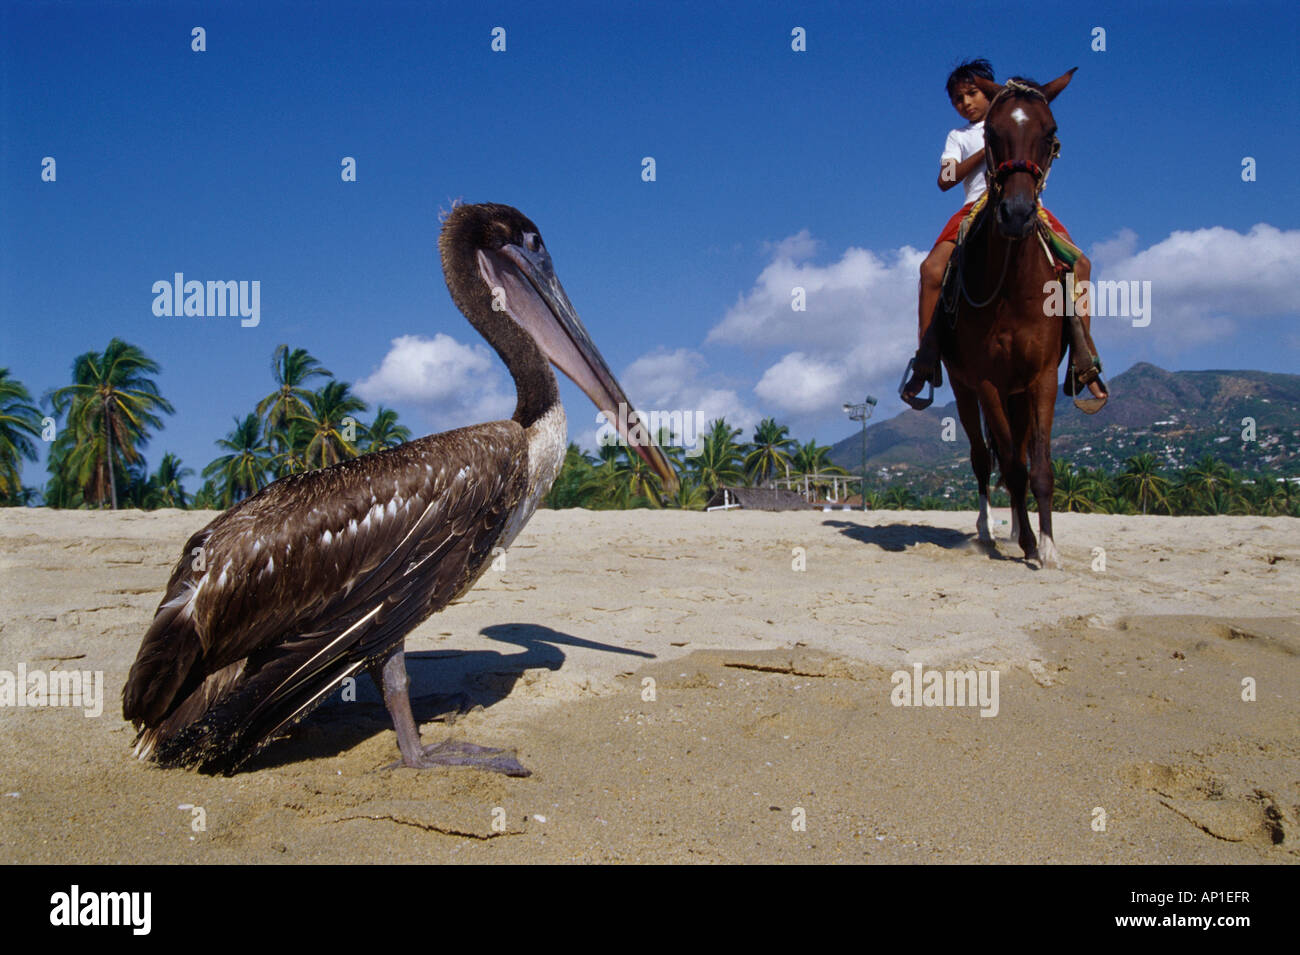 Pelican on the beach, boy riding horse in the background, Pie de la Cuesta, near Acapulco, Mexico, America Stock Photo